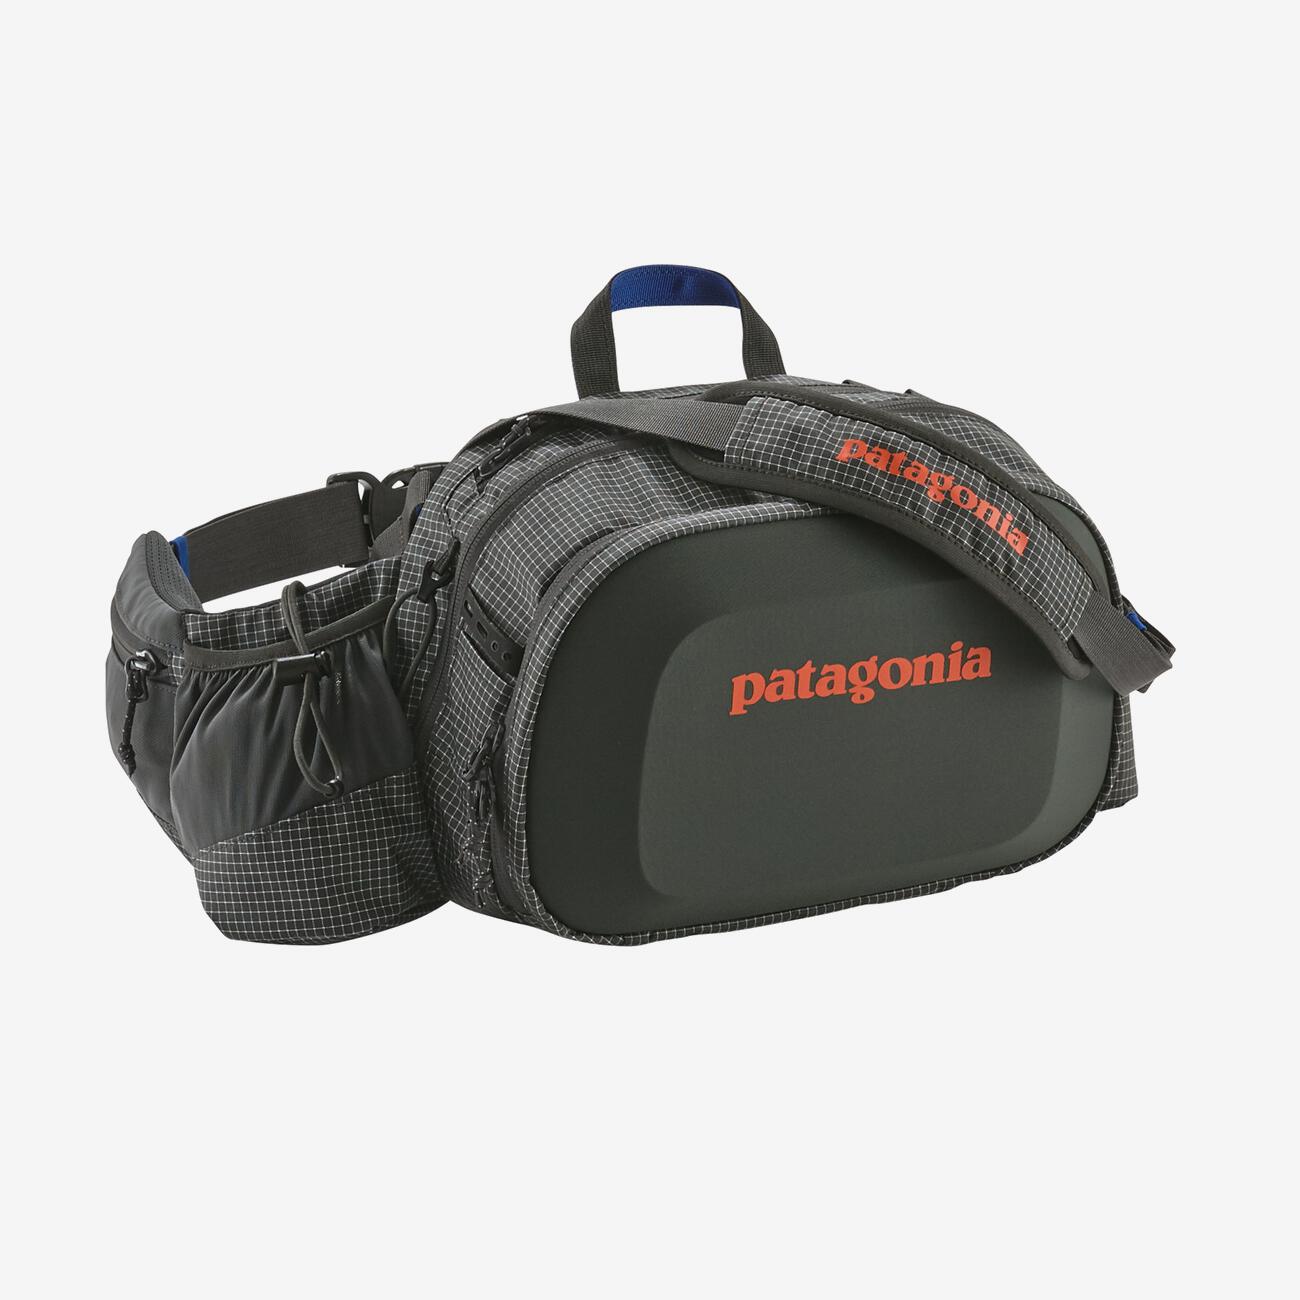 Patagonia Stealth Hip Pack - Forge Grey